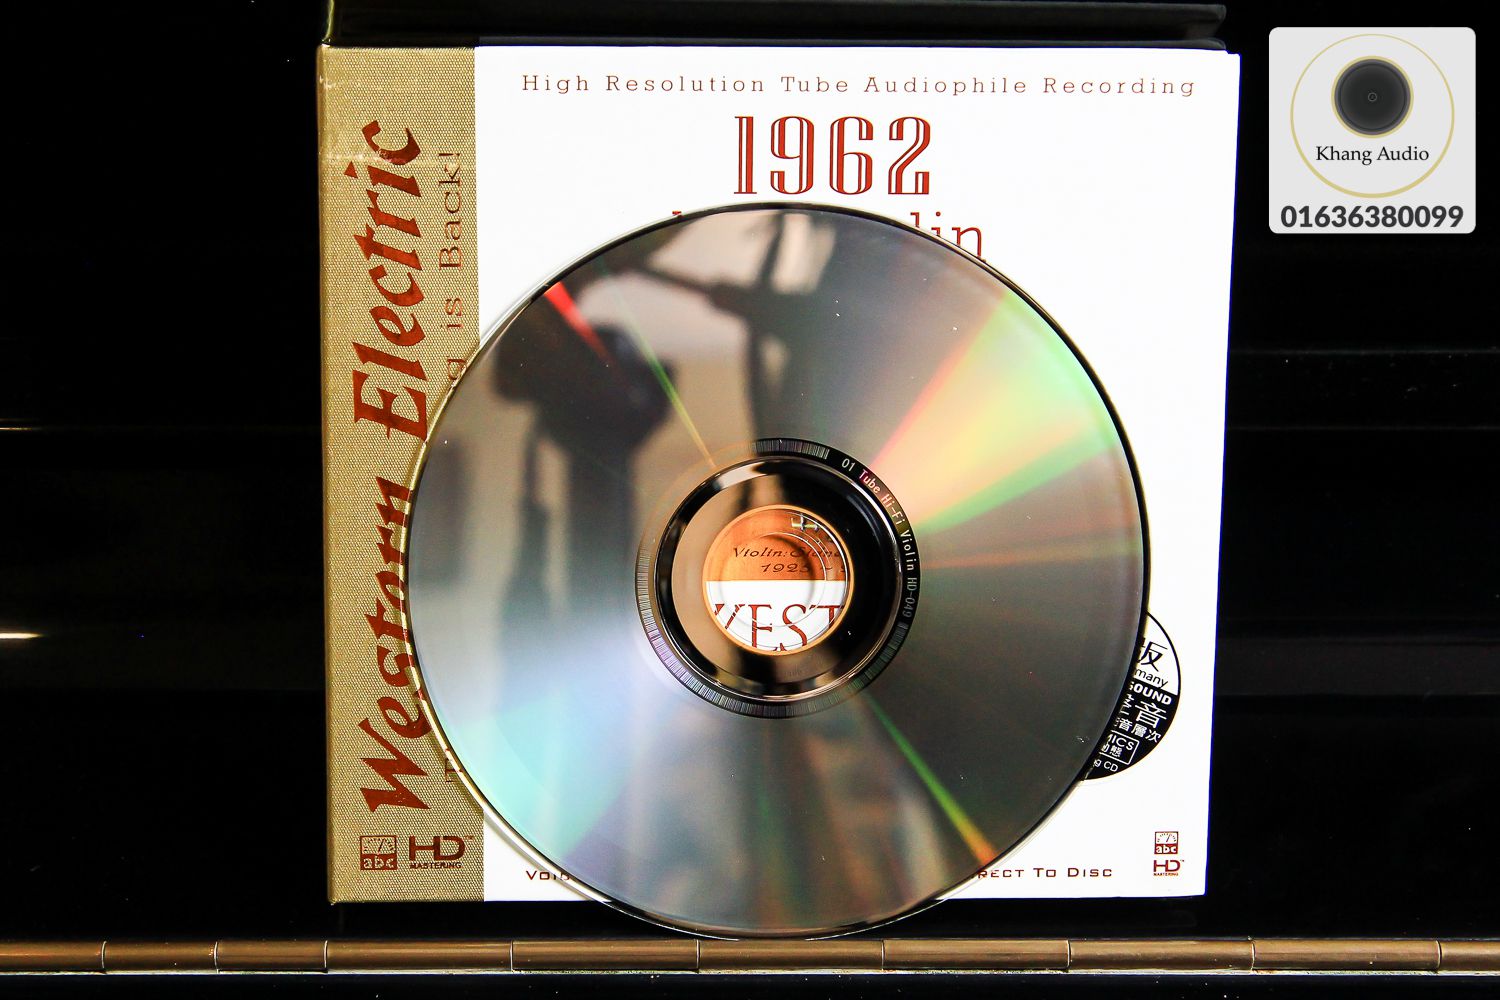 Western Electric Sound - 1962 Hi-Fi Violin HQ Khang Audio 0336380099